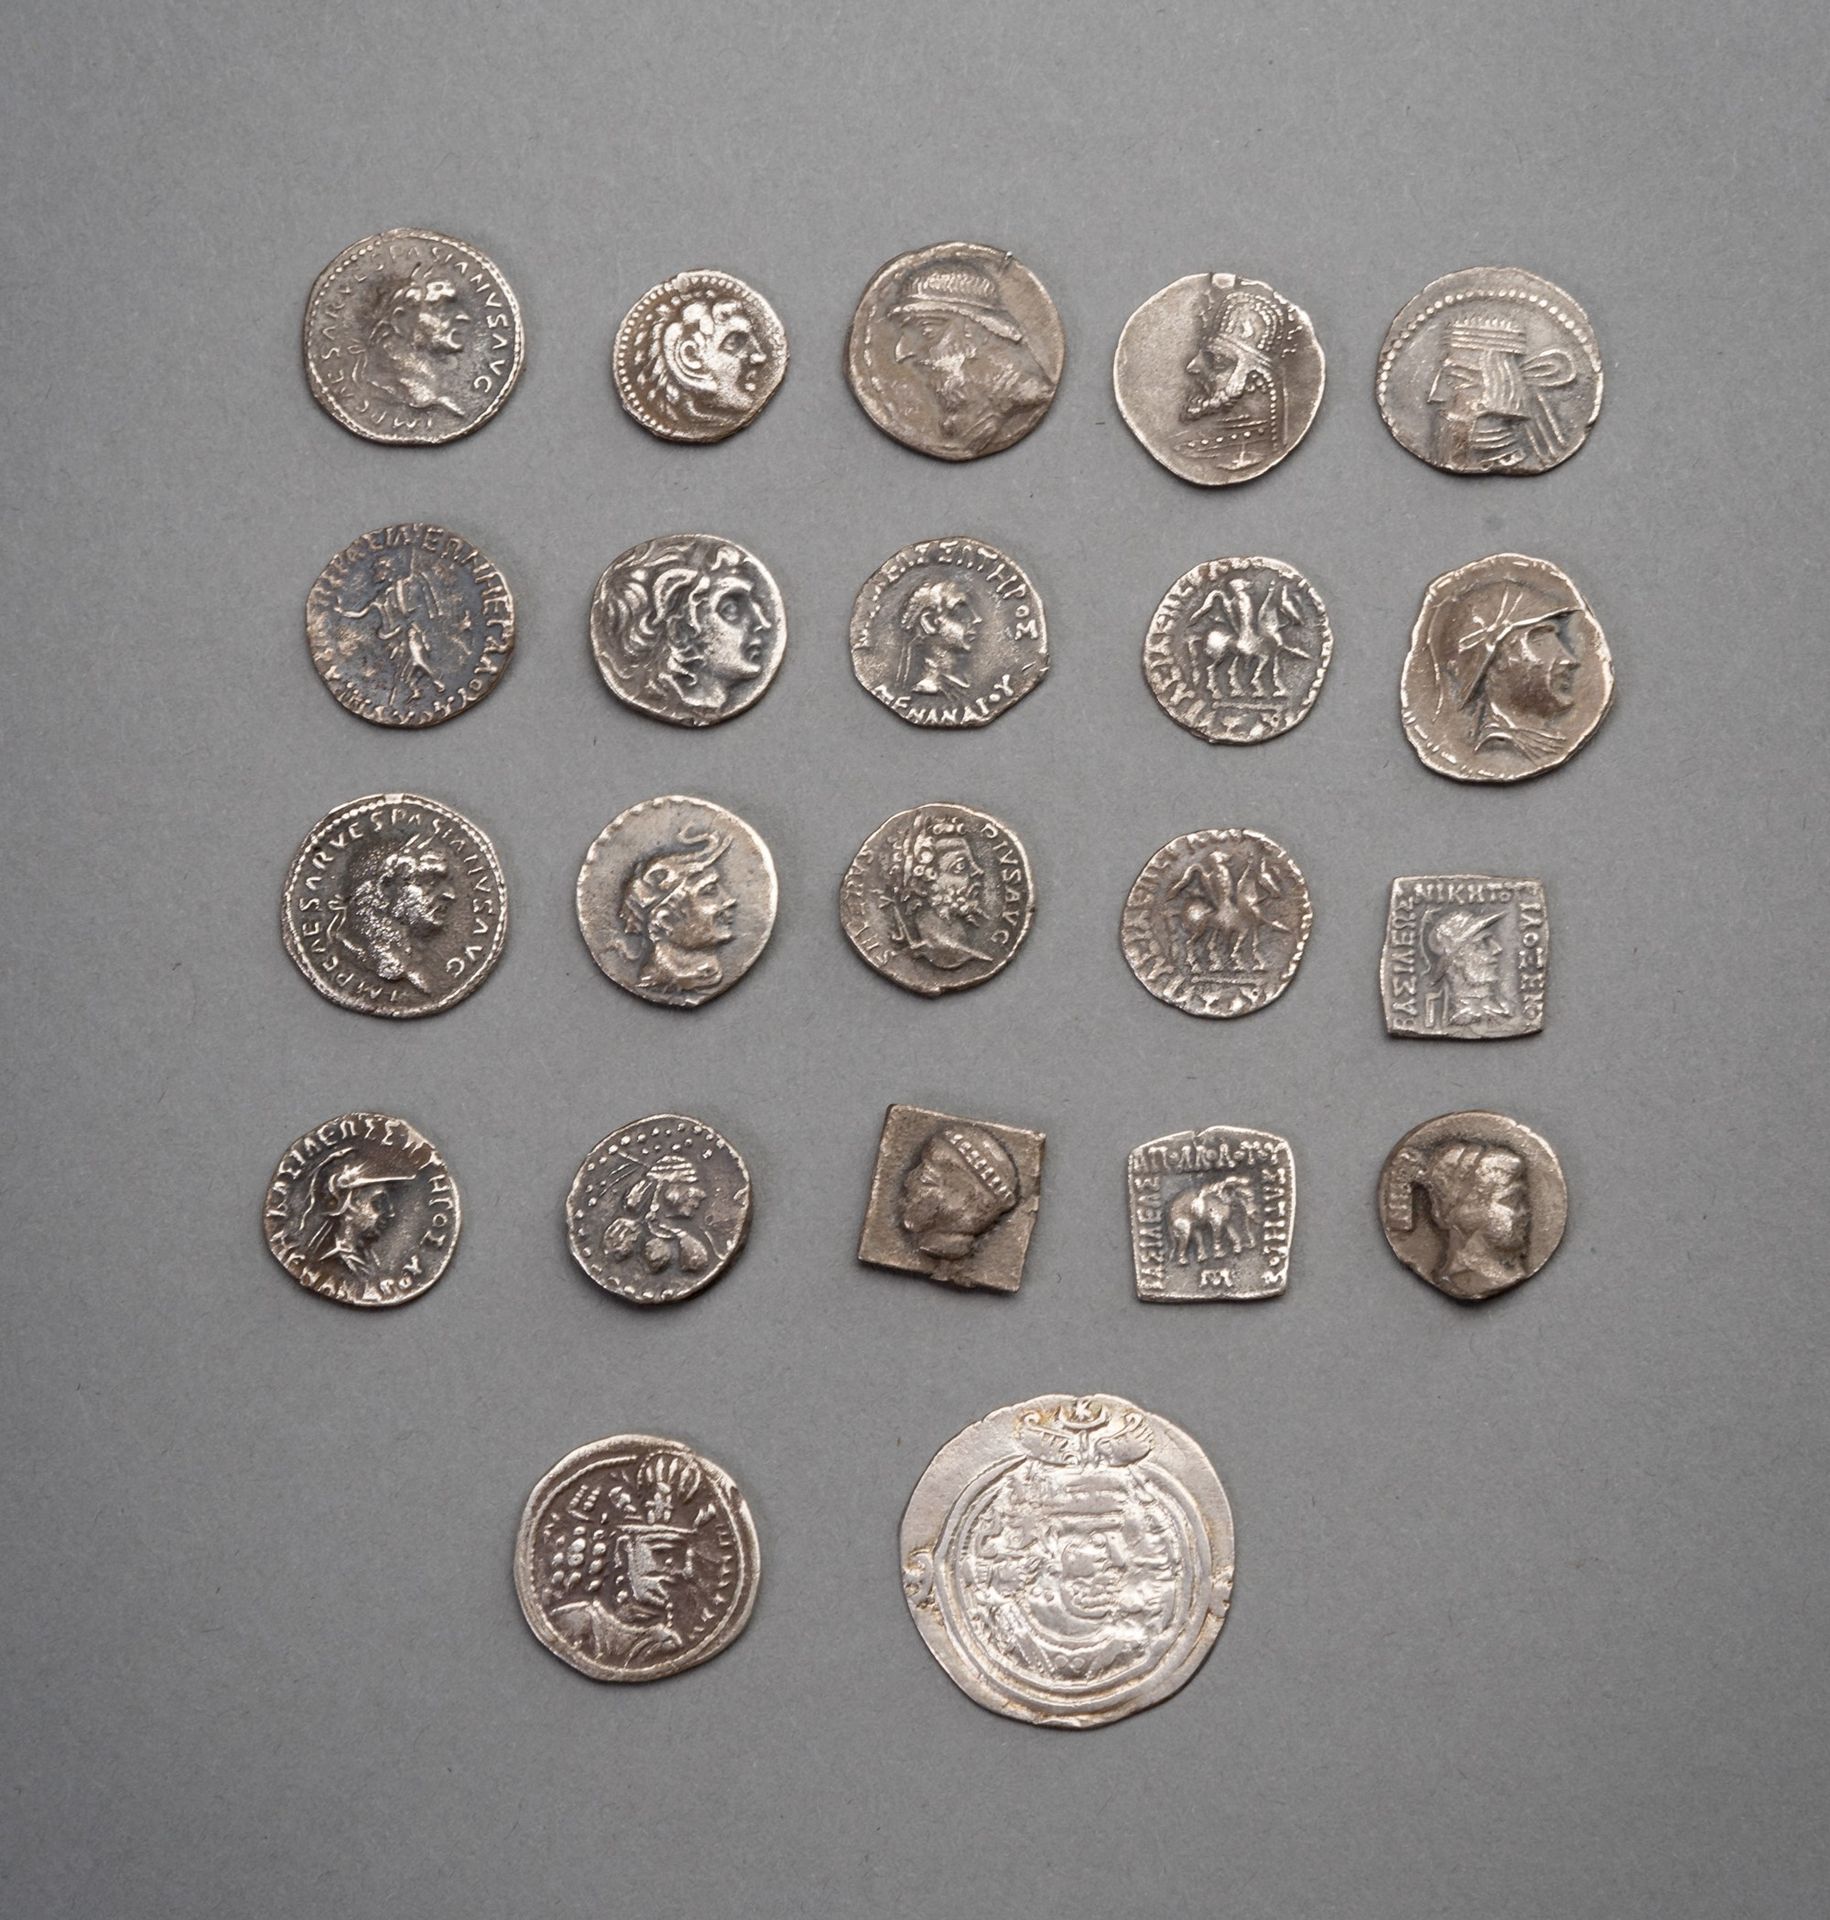 A GROUP OF 22 SILVER COINS A GROUP OF 22 SILVER COINS
Western Asia, 250 BC - 700&hellip;